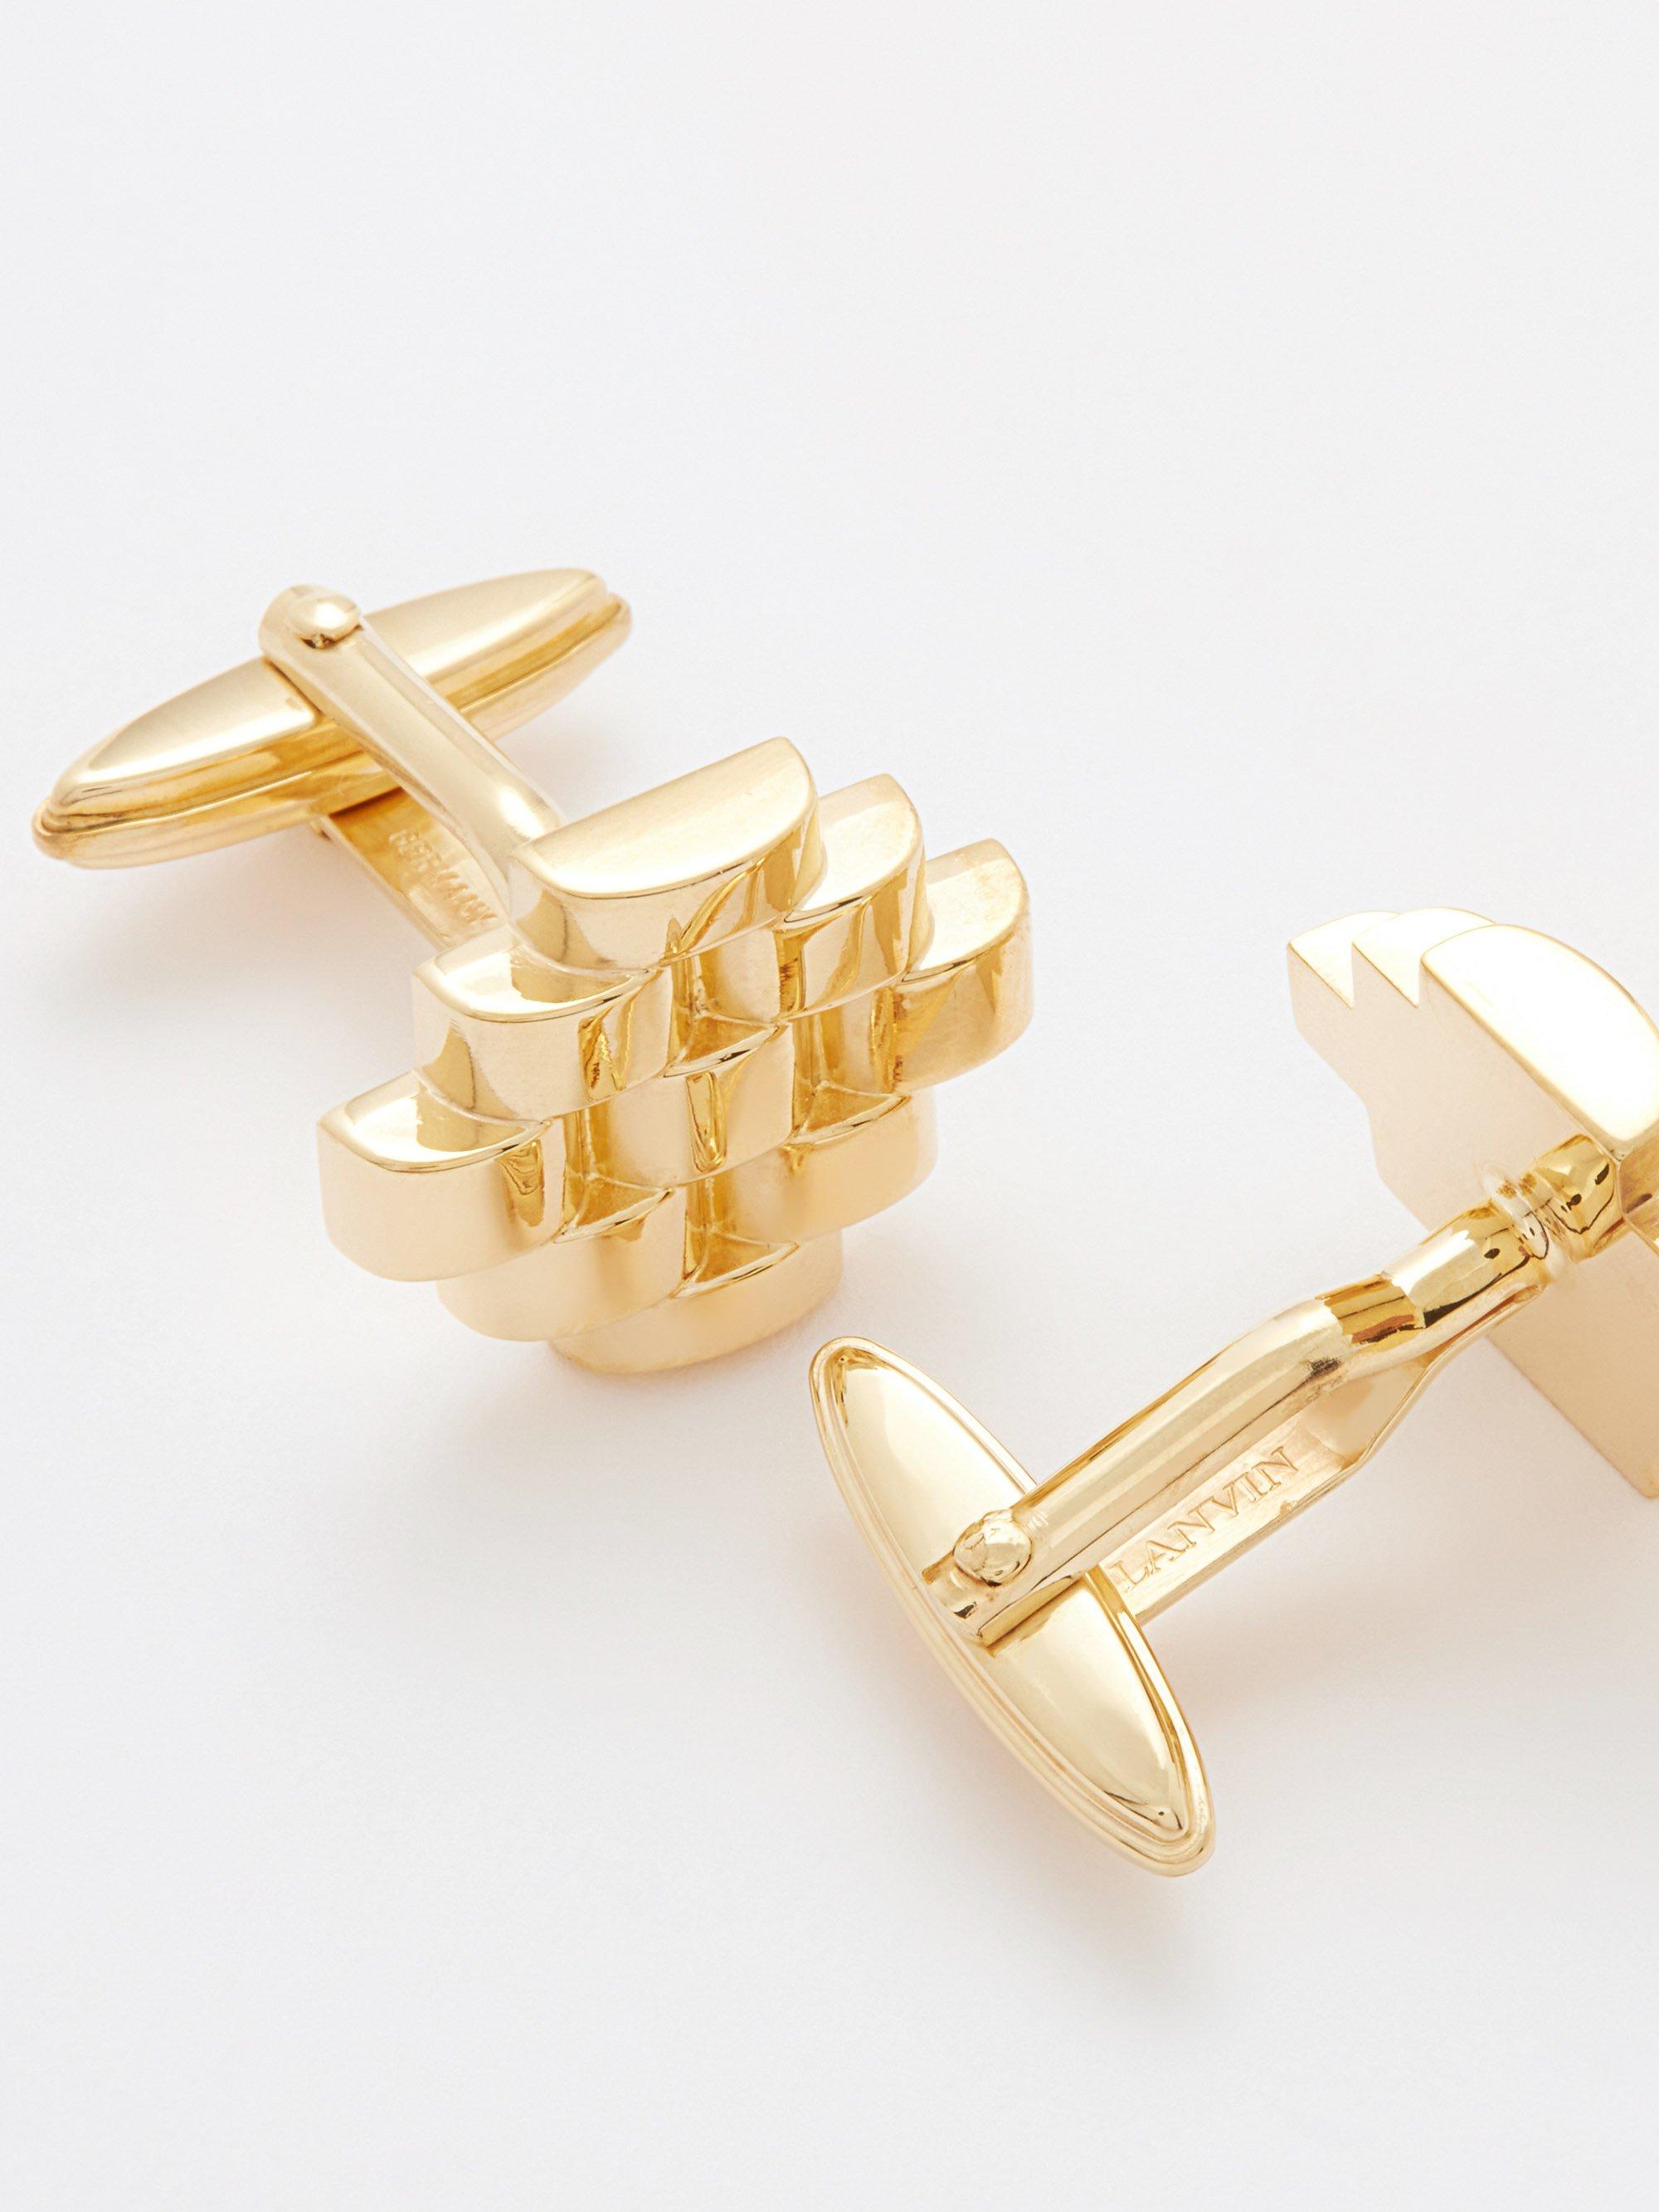 Lanvin - Textured Gold-plated Cufflinks - Mens - Gold